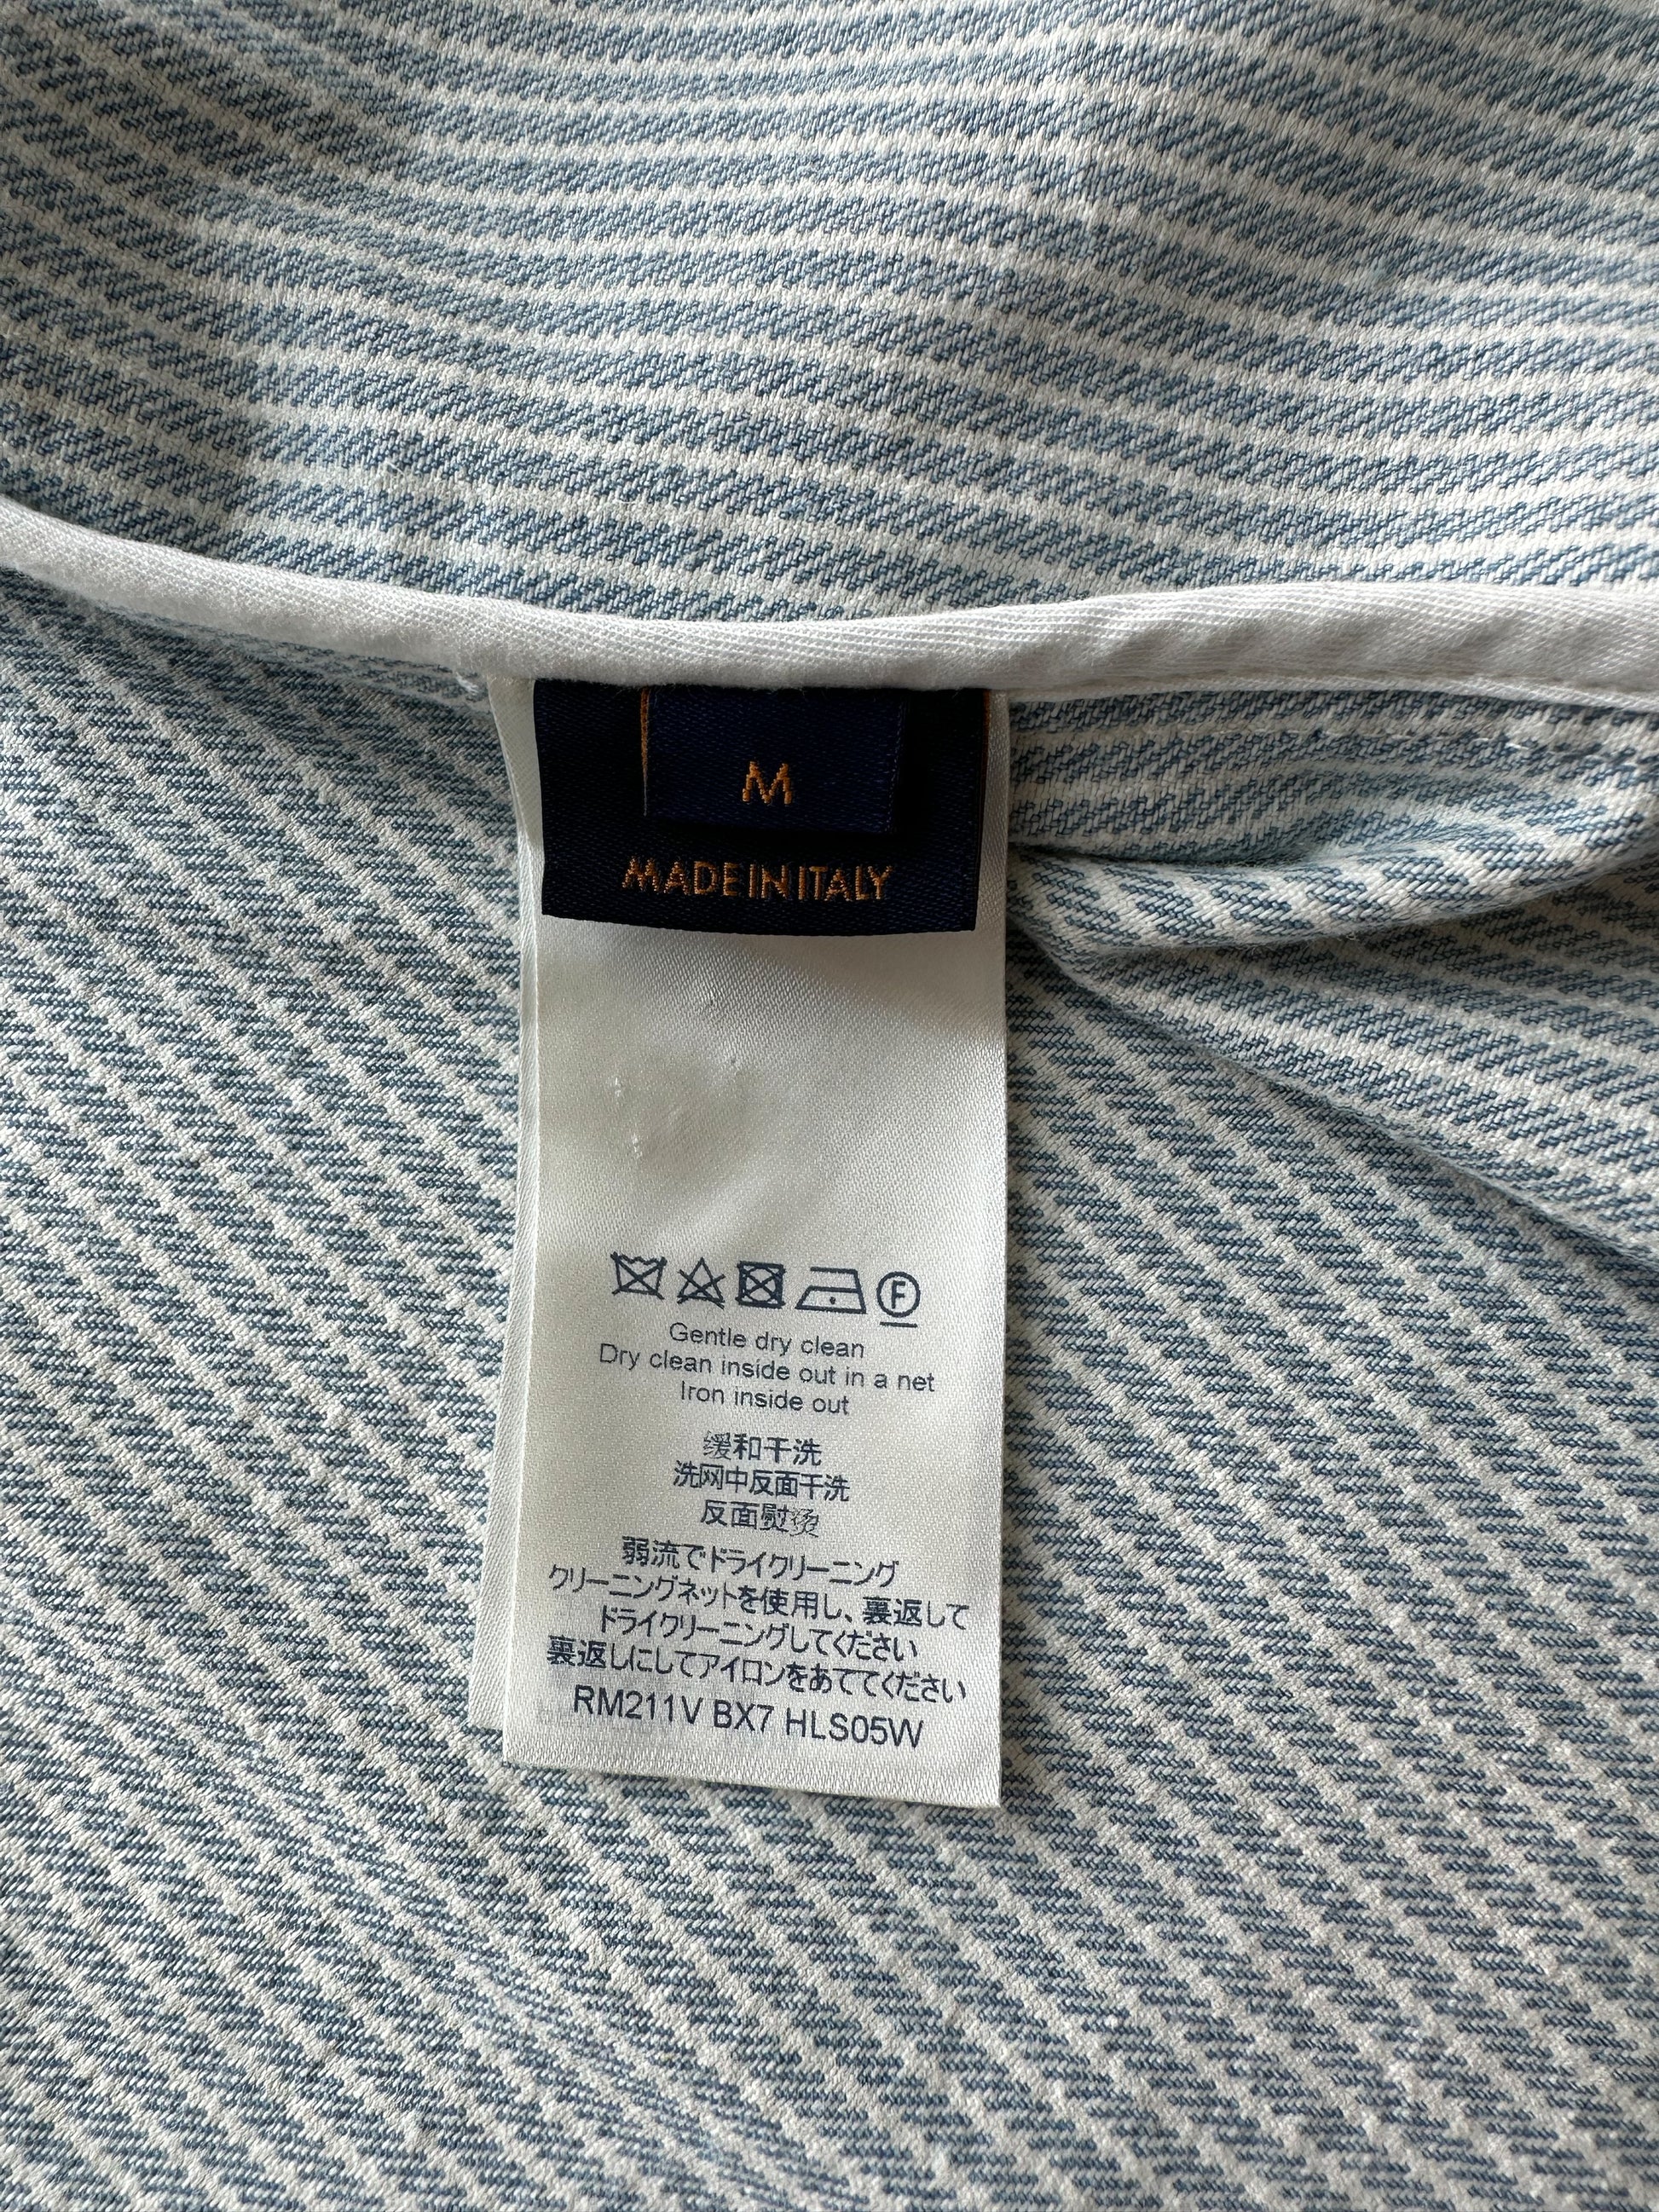 Louis Vuitton 2021 Monogram Watercolor Overshirt Western Shirt - Blue  Casual Shirts, Clothing - LOU742128